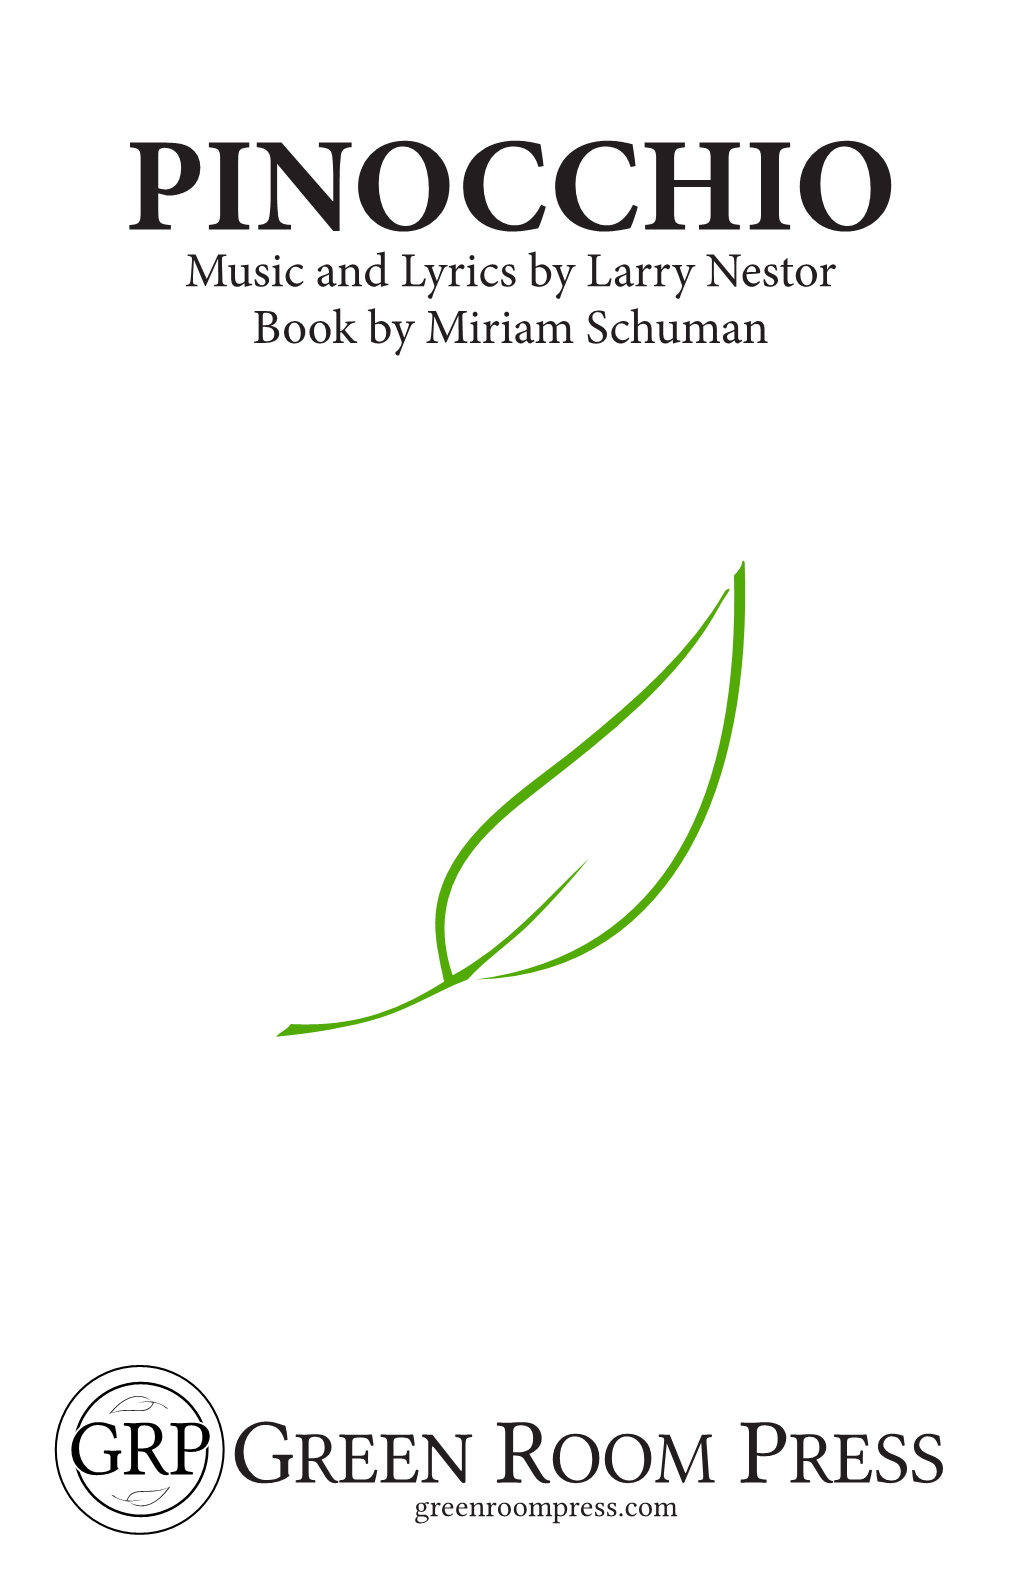 PINOCCHIO Music and Lyrics by Larry Nestor Book by Miriam Schuman